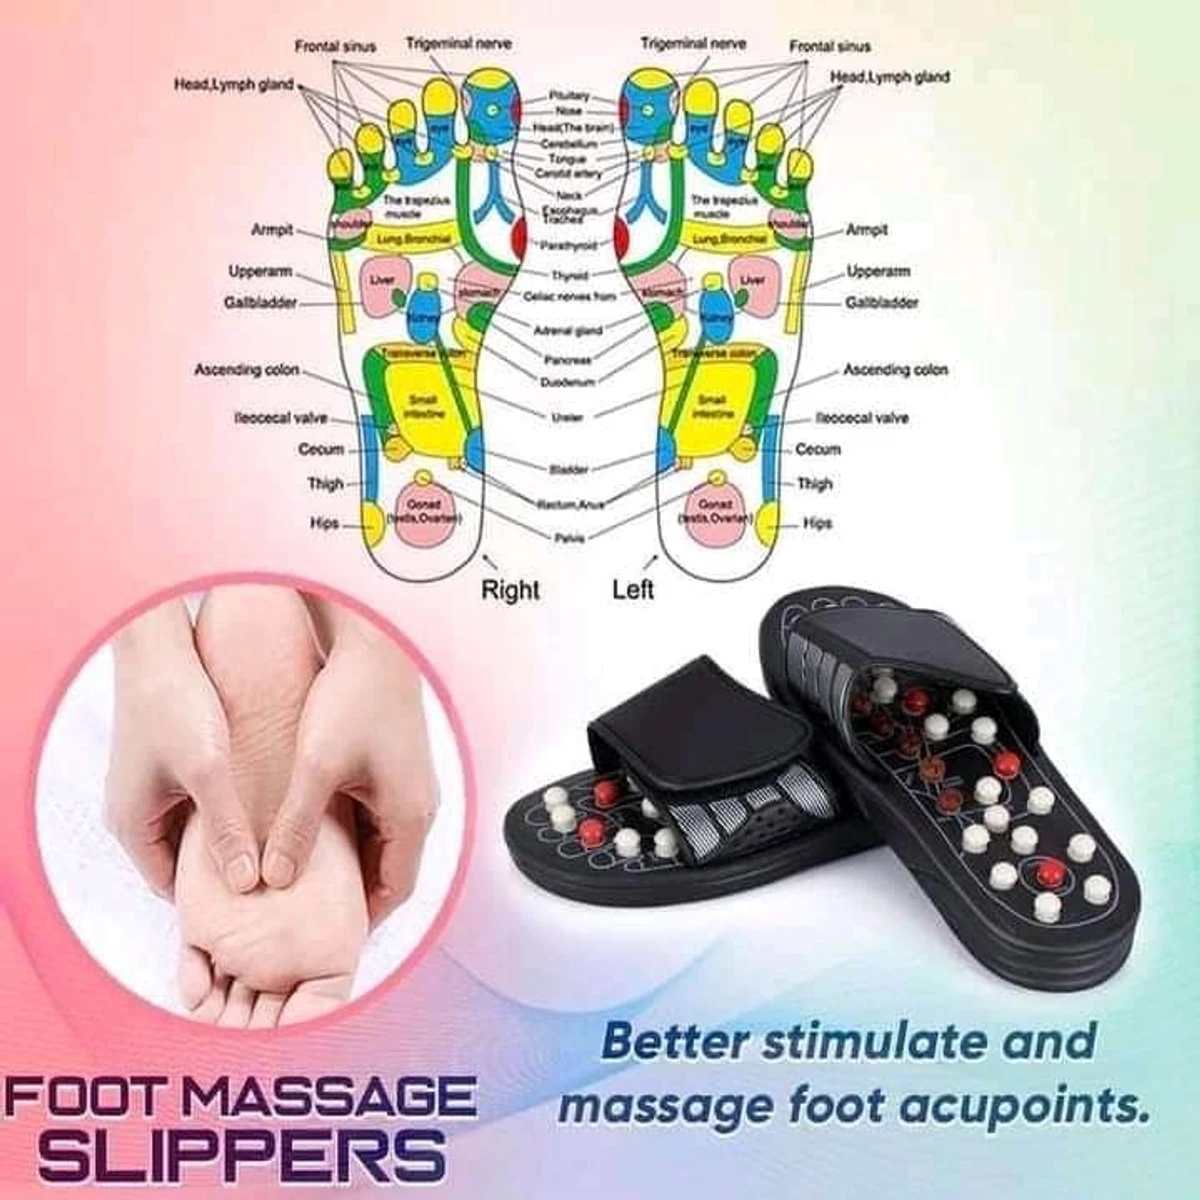 Foot massage shoe